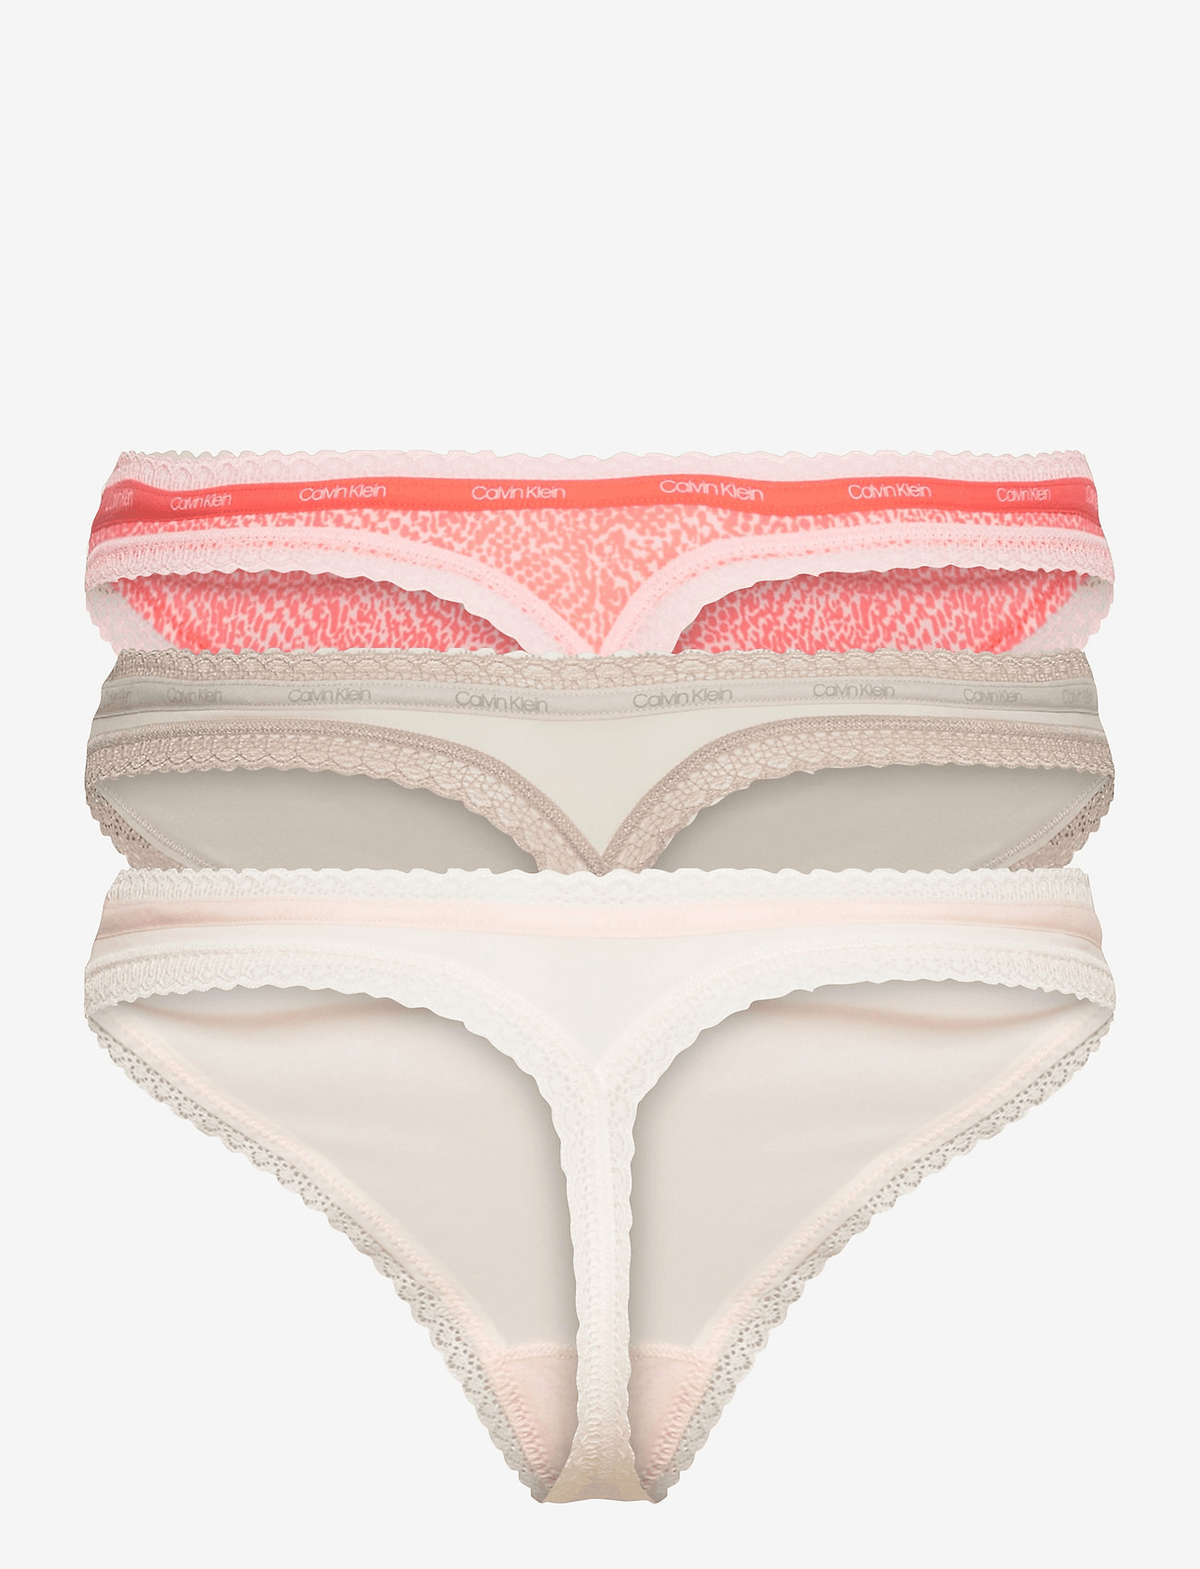 Bottom Up Thongs  - Sanke/ Dove/ Coral - Calvin Klein - Splash Swimwear  - calvin klein, lingerie, Mar22 - Splash Swimwear 